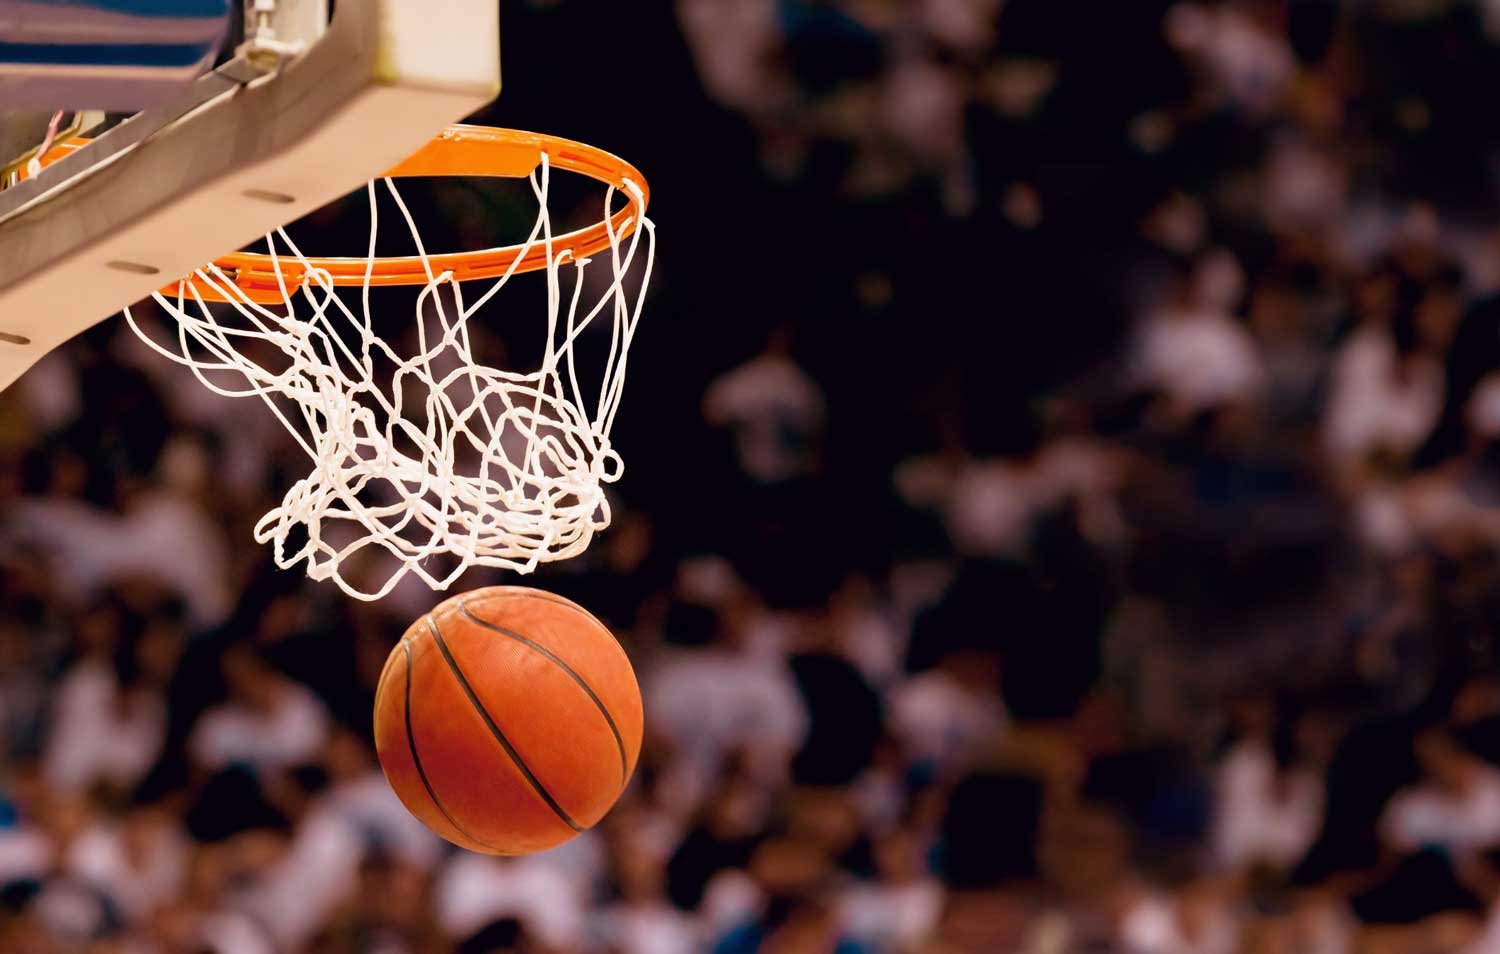 Basketball-Net